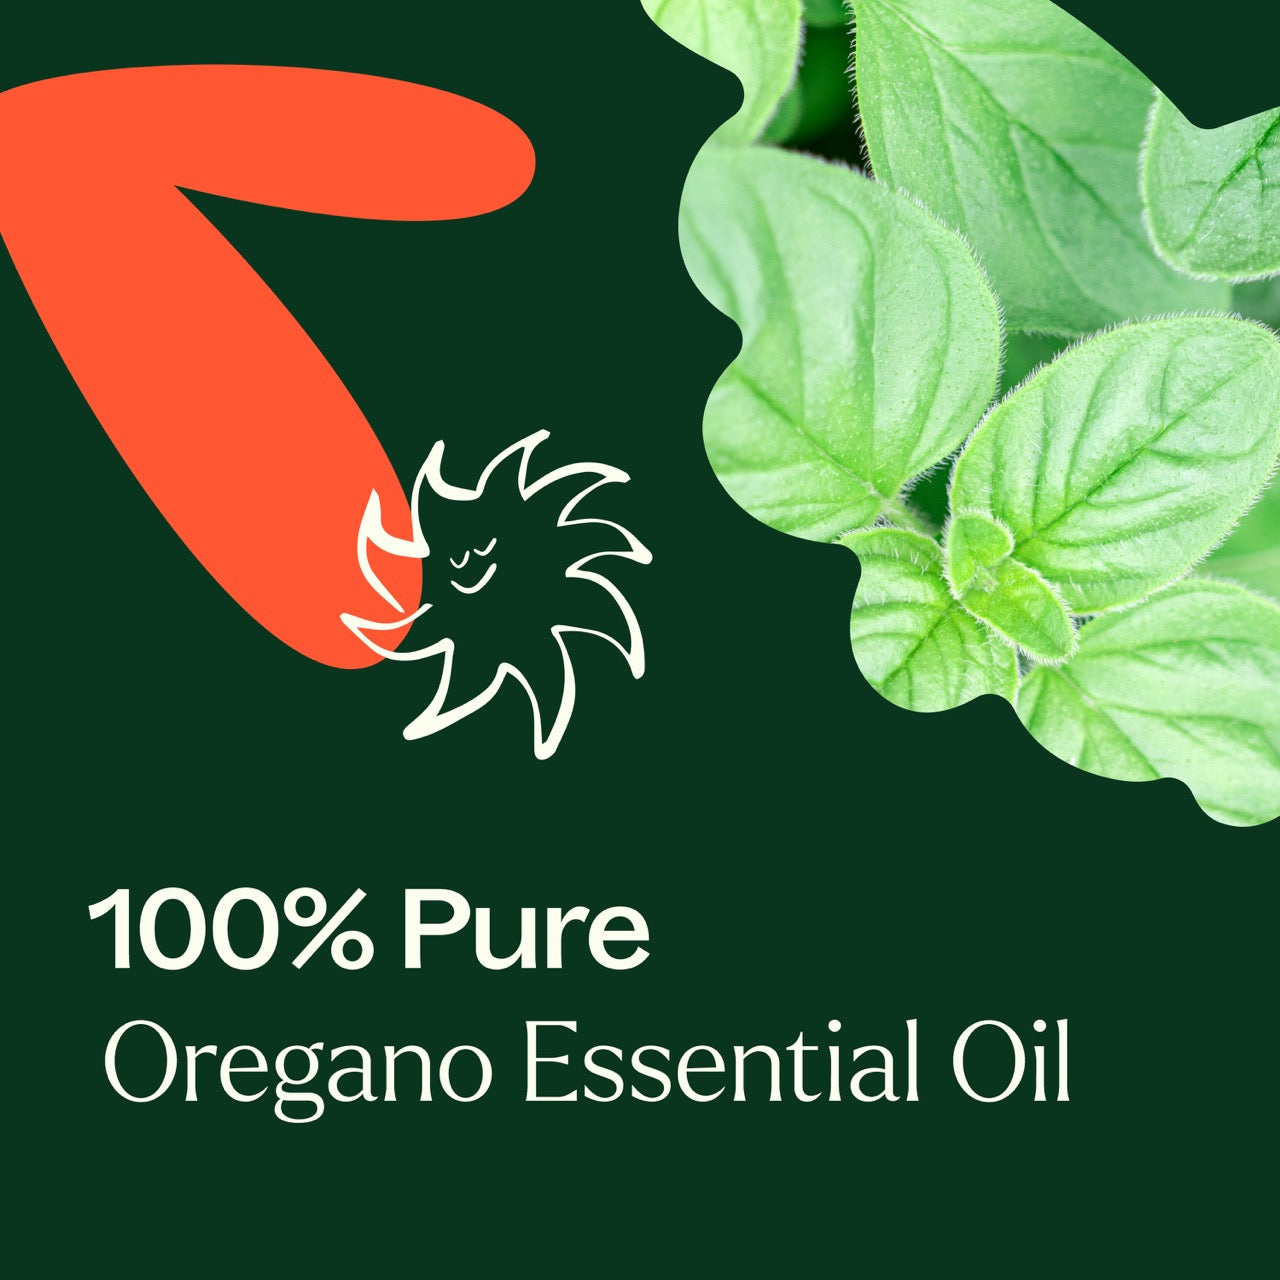 100% pure Oregano Essential Oil